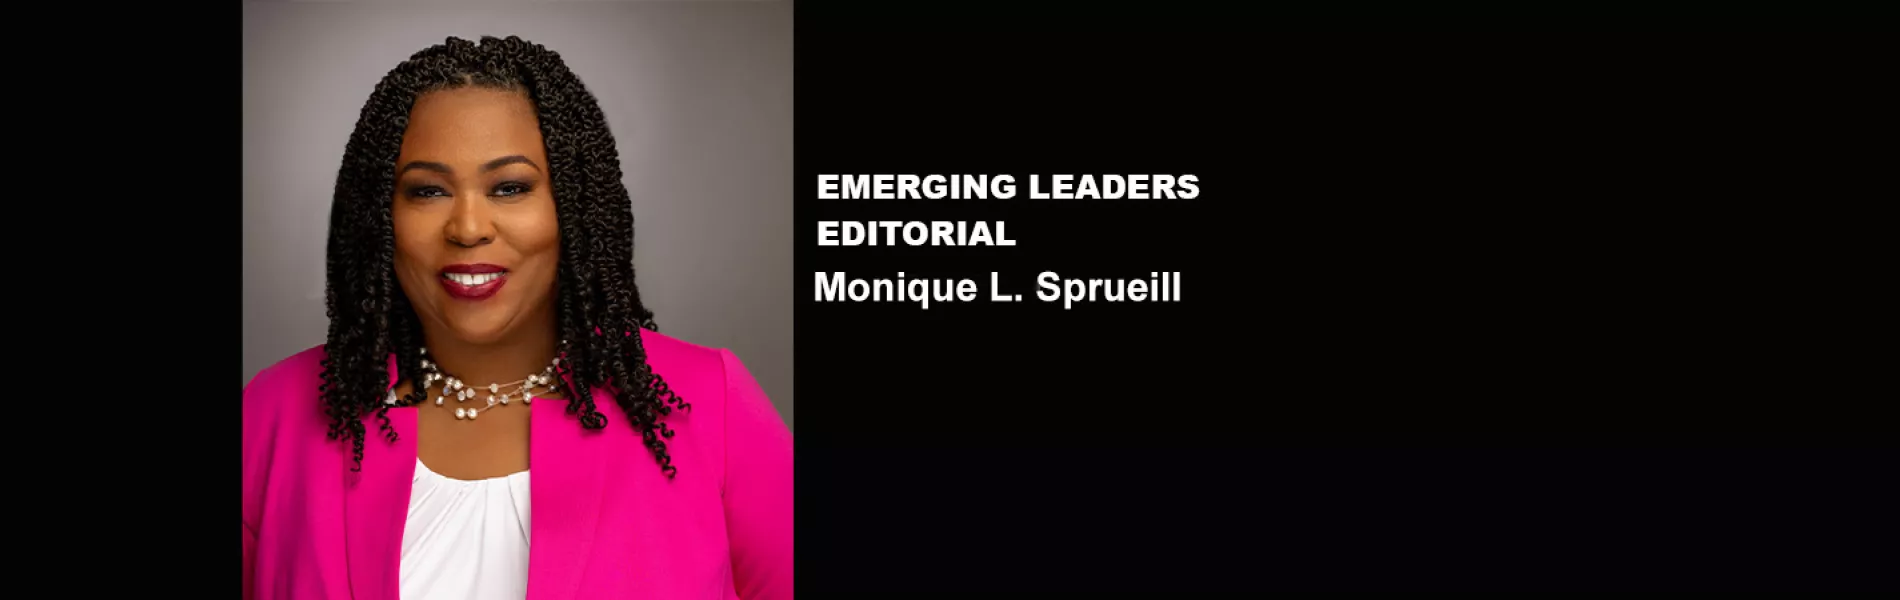 Emerging Leaders Editorial: Monique Sprueill